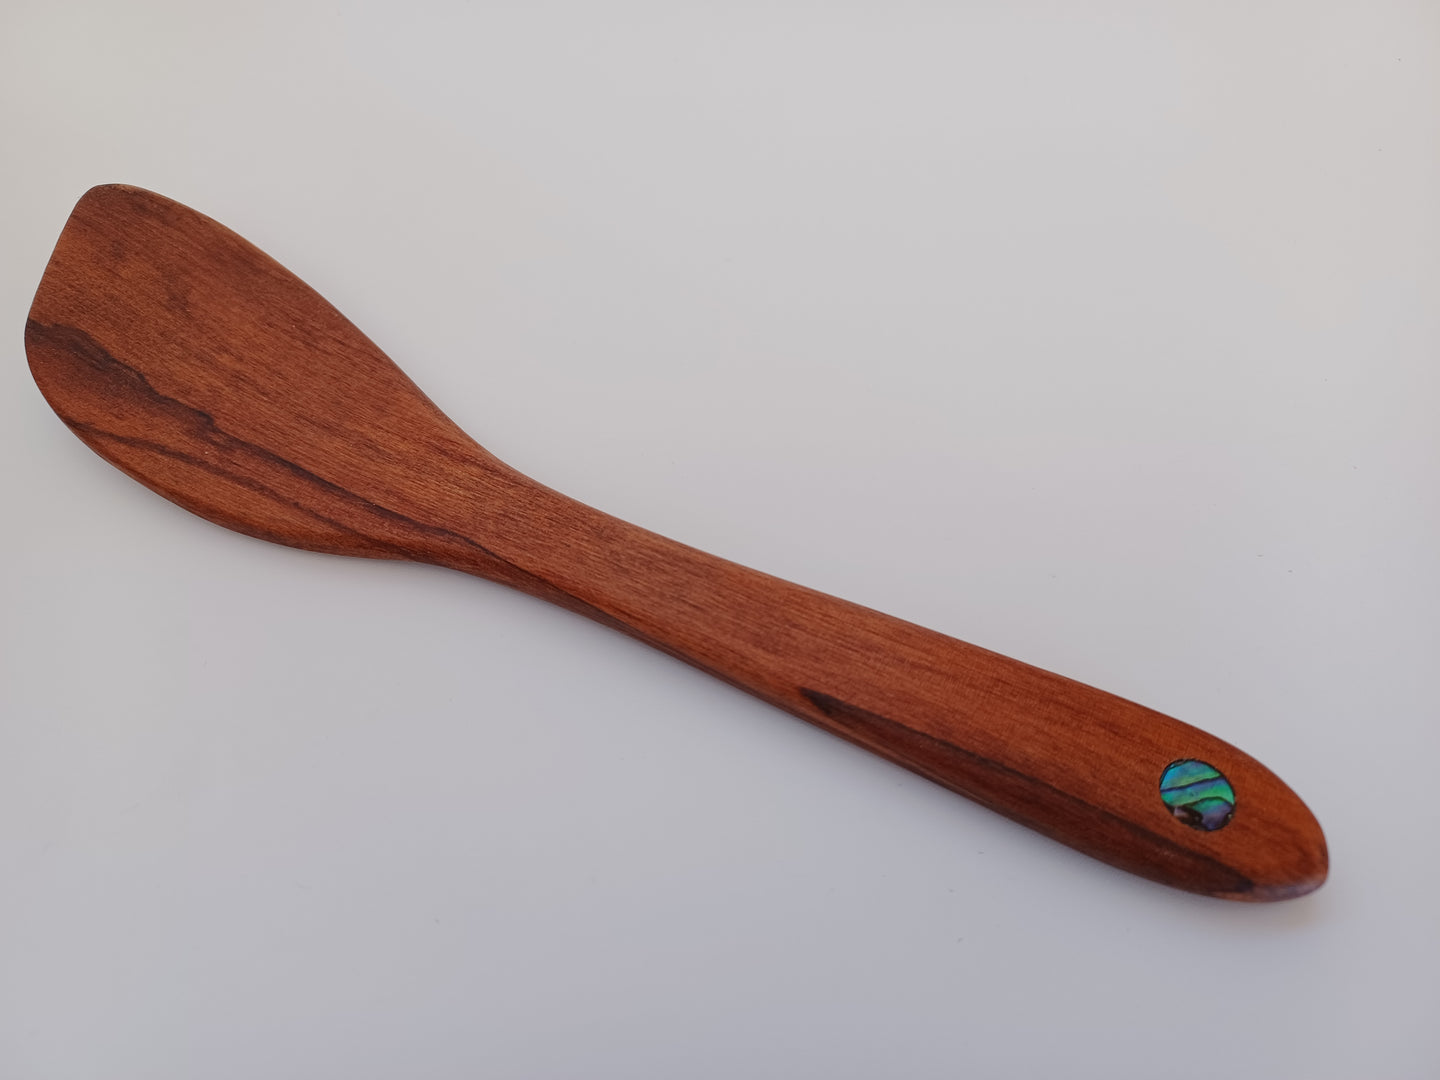 Frans's spatula